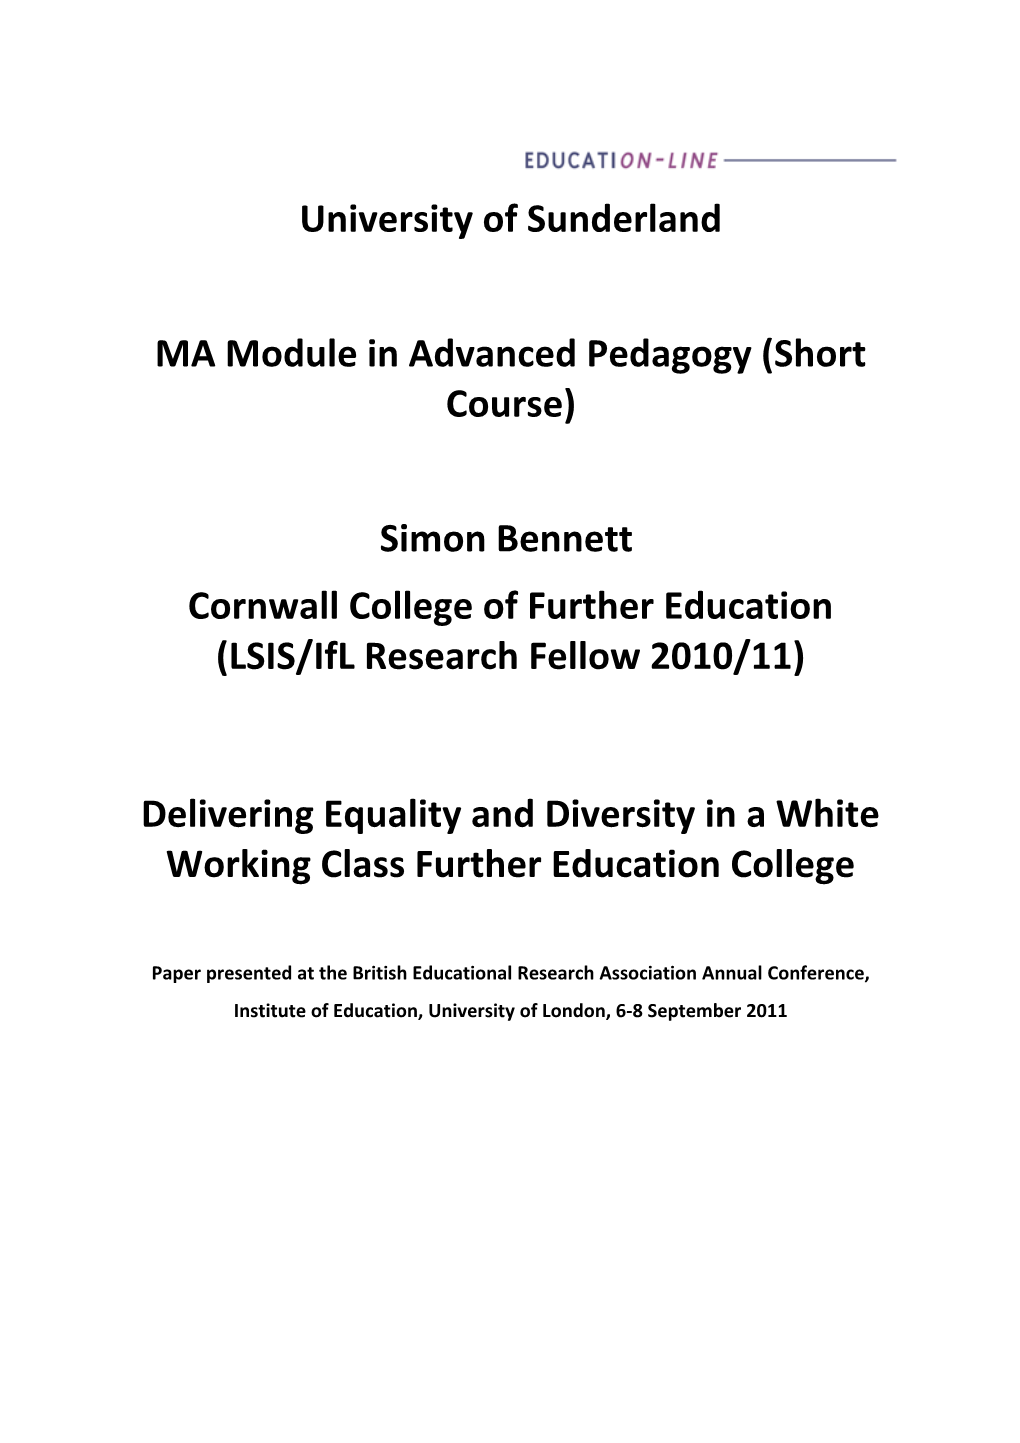 MA Module in Advanced Pedagogy (Short Course)